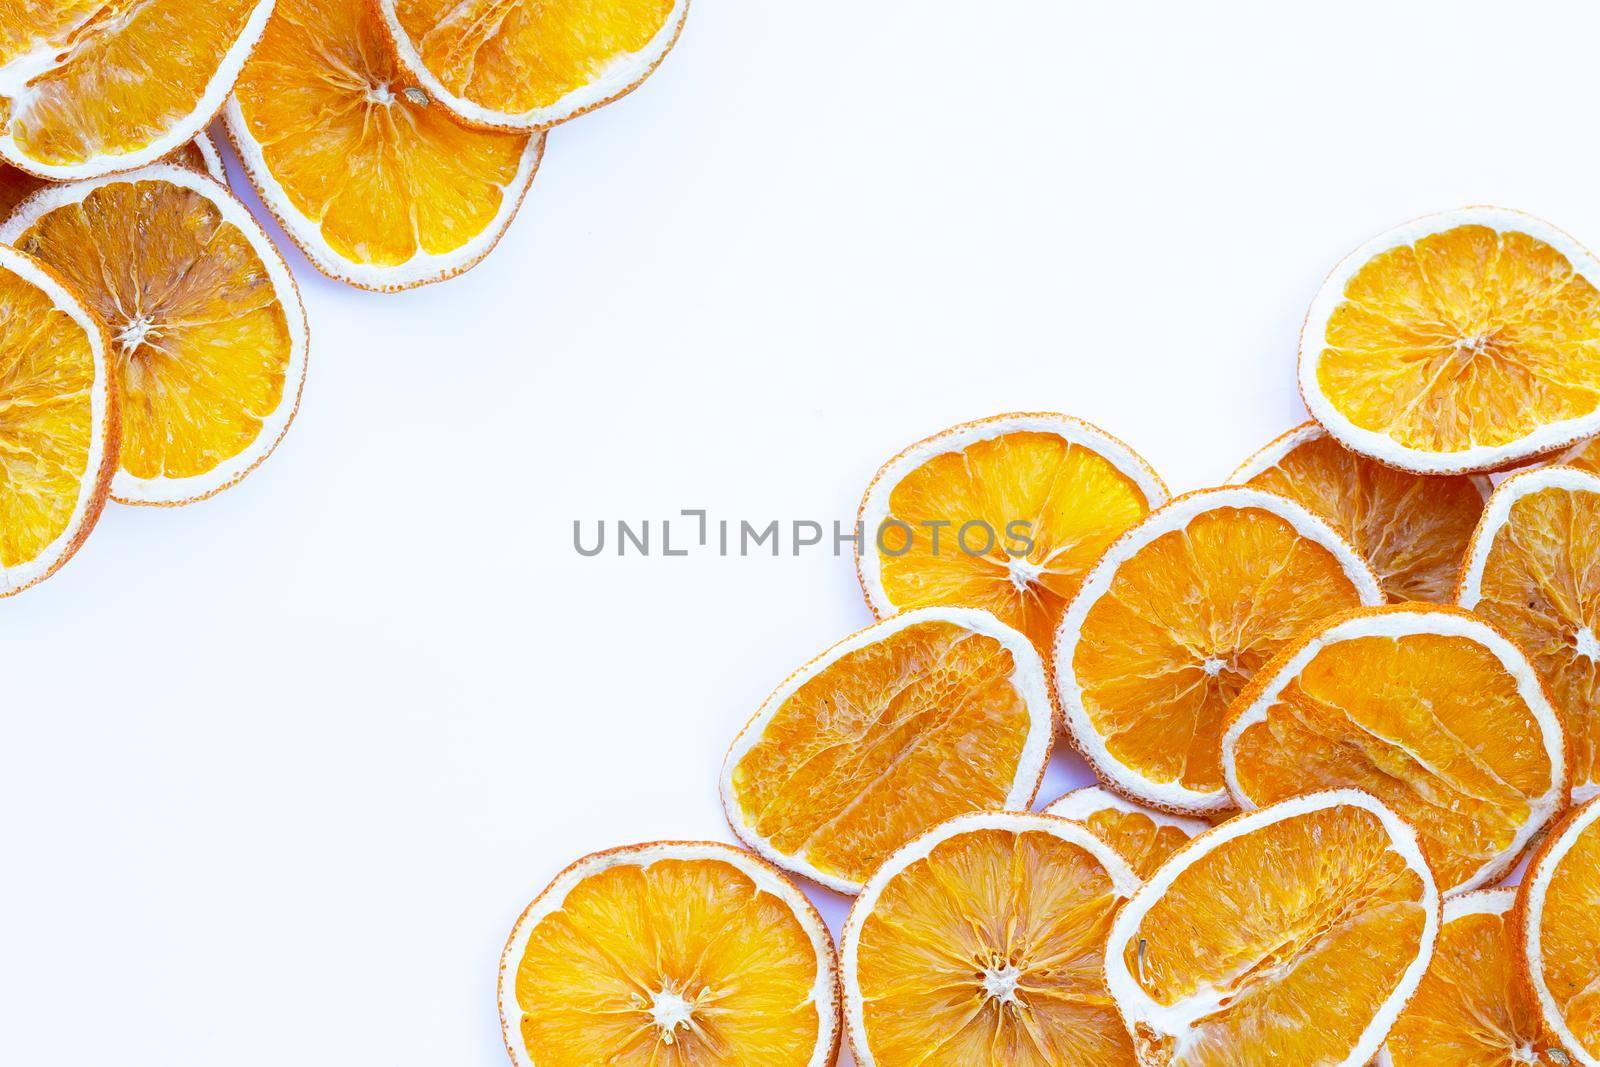 Dried orange slices on white background.